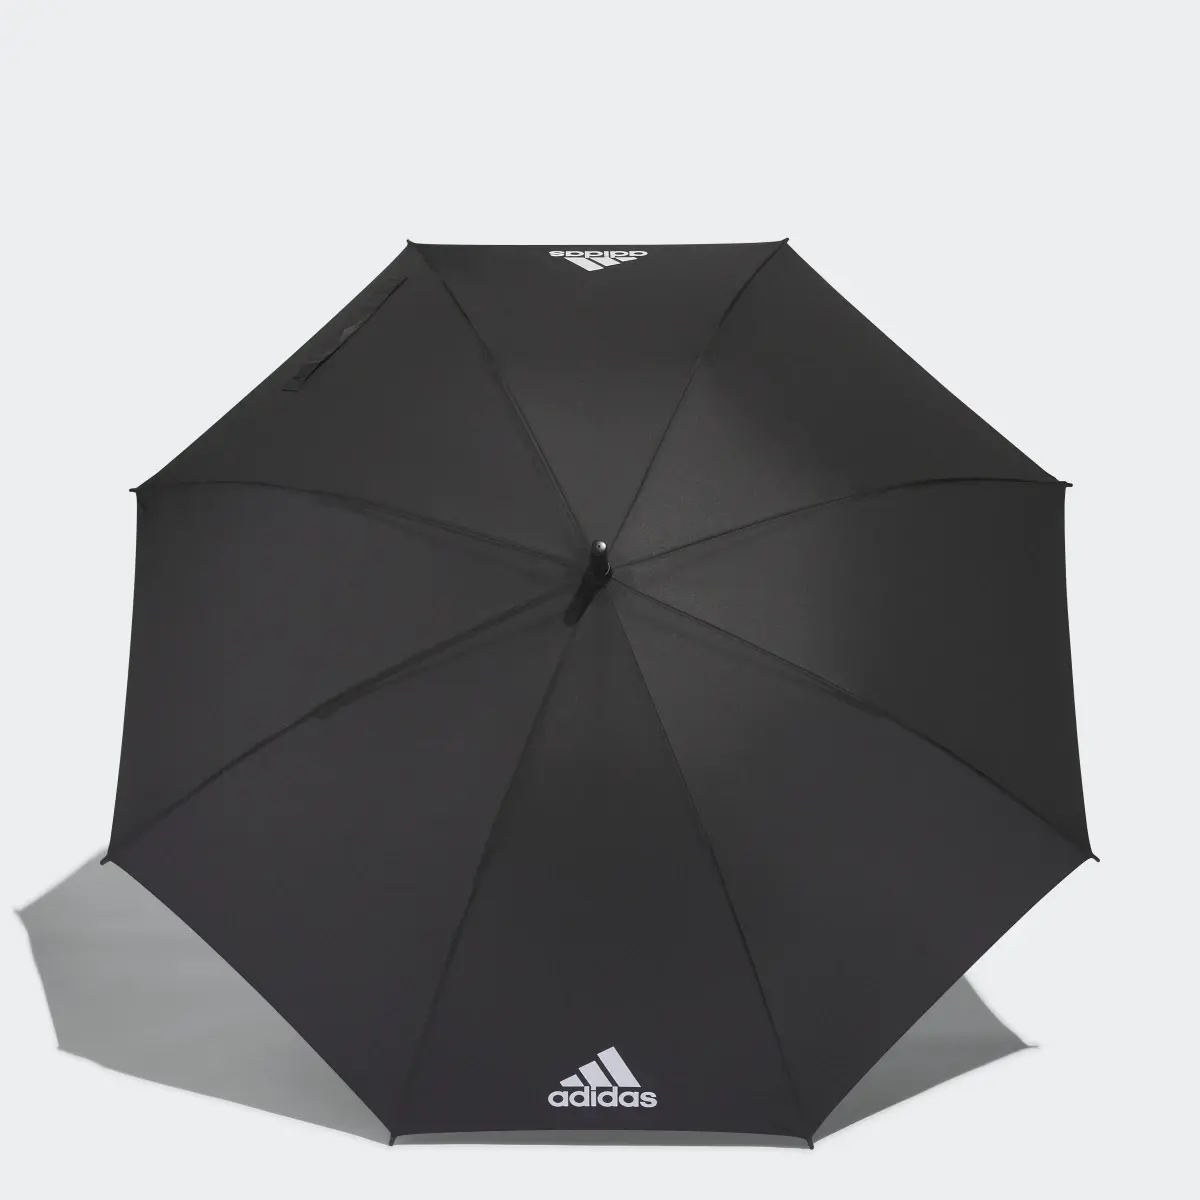 Adidas Single Canopy Umbrella 60". 1